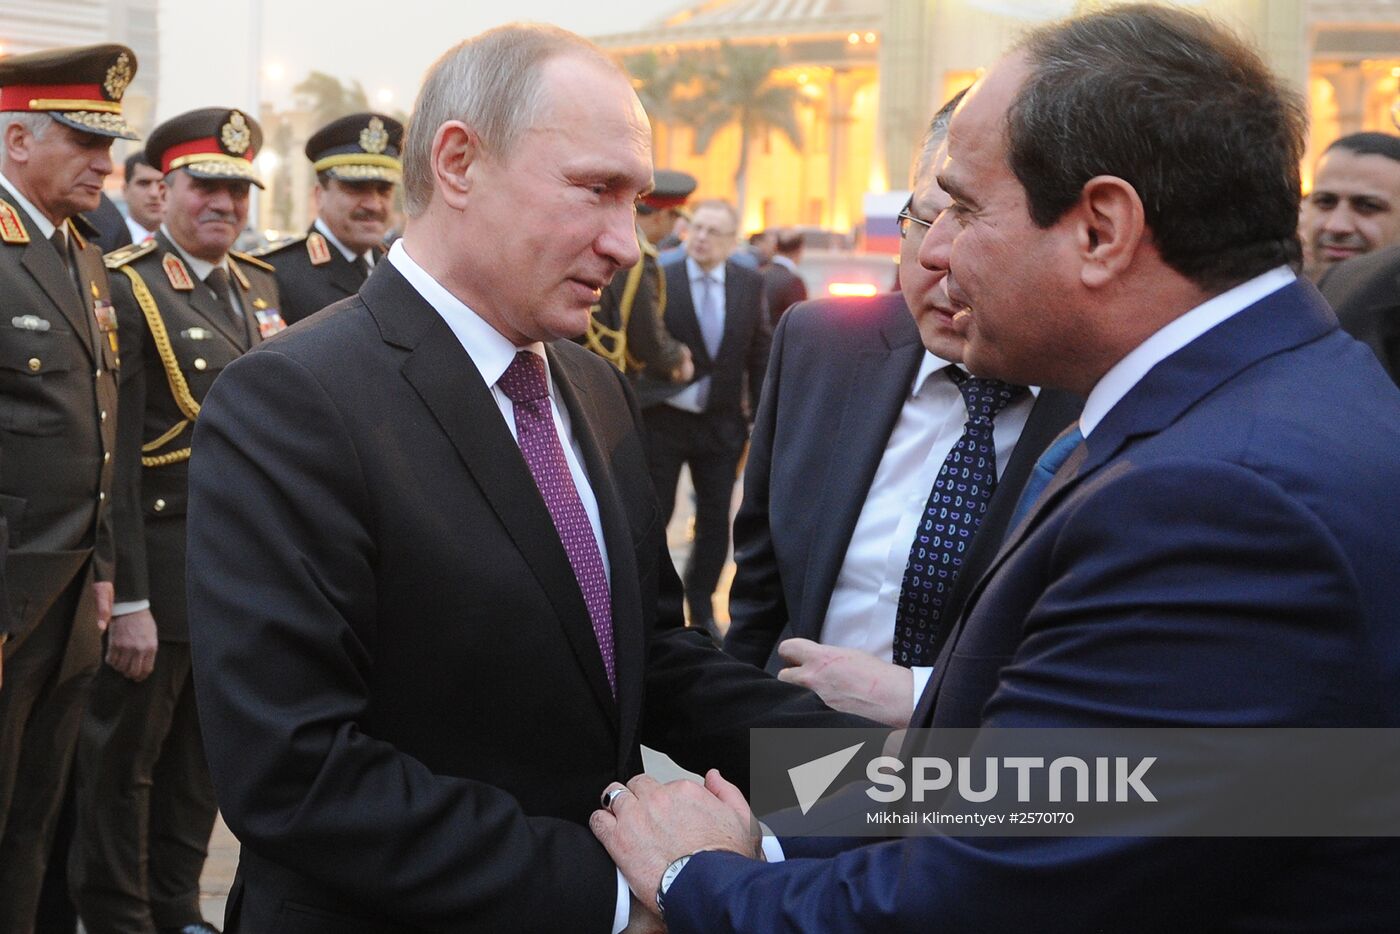 President Vladimir Putin visits Egypt. Day Two.